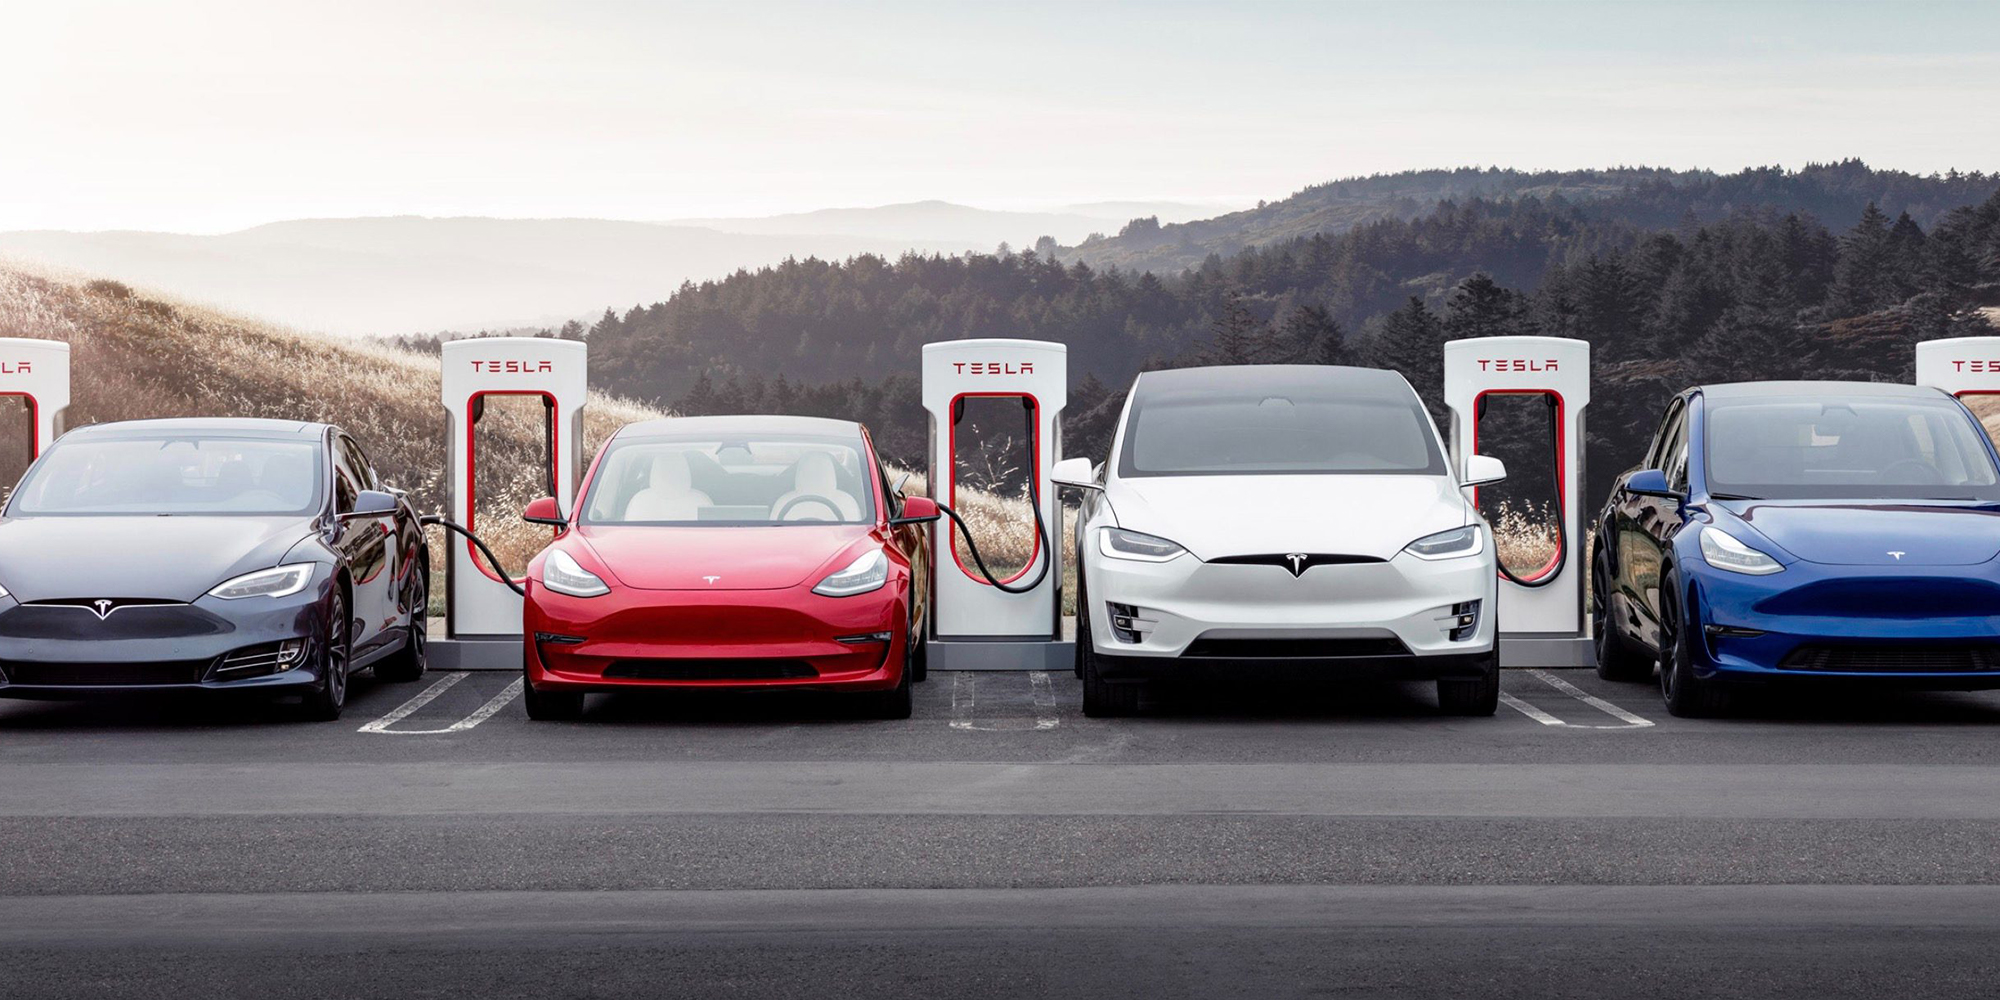 https://electrek.co/wp-content/uploads/sites/3/2021/03/Tesla-Fleet-Charging.jpg?quality=82&strip=all